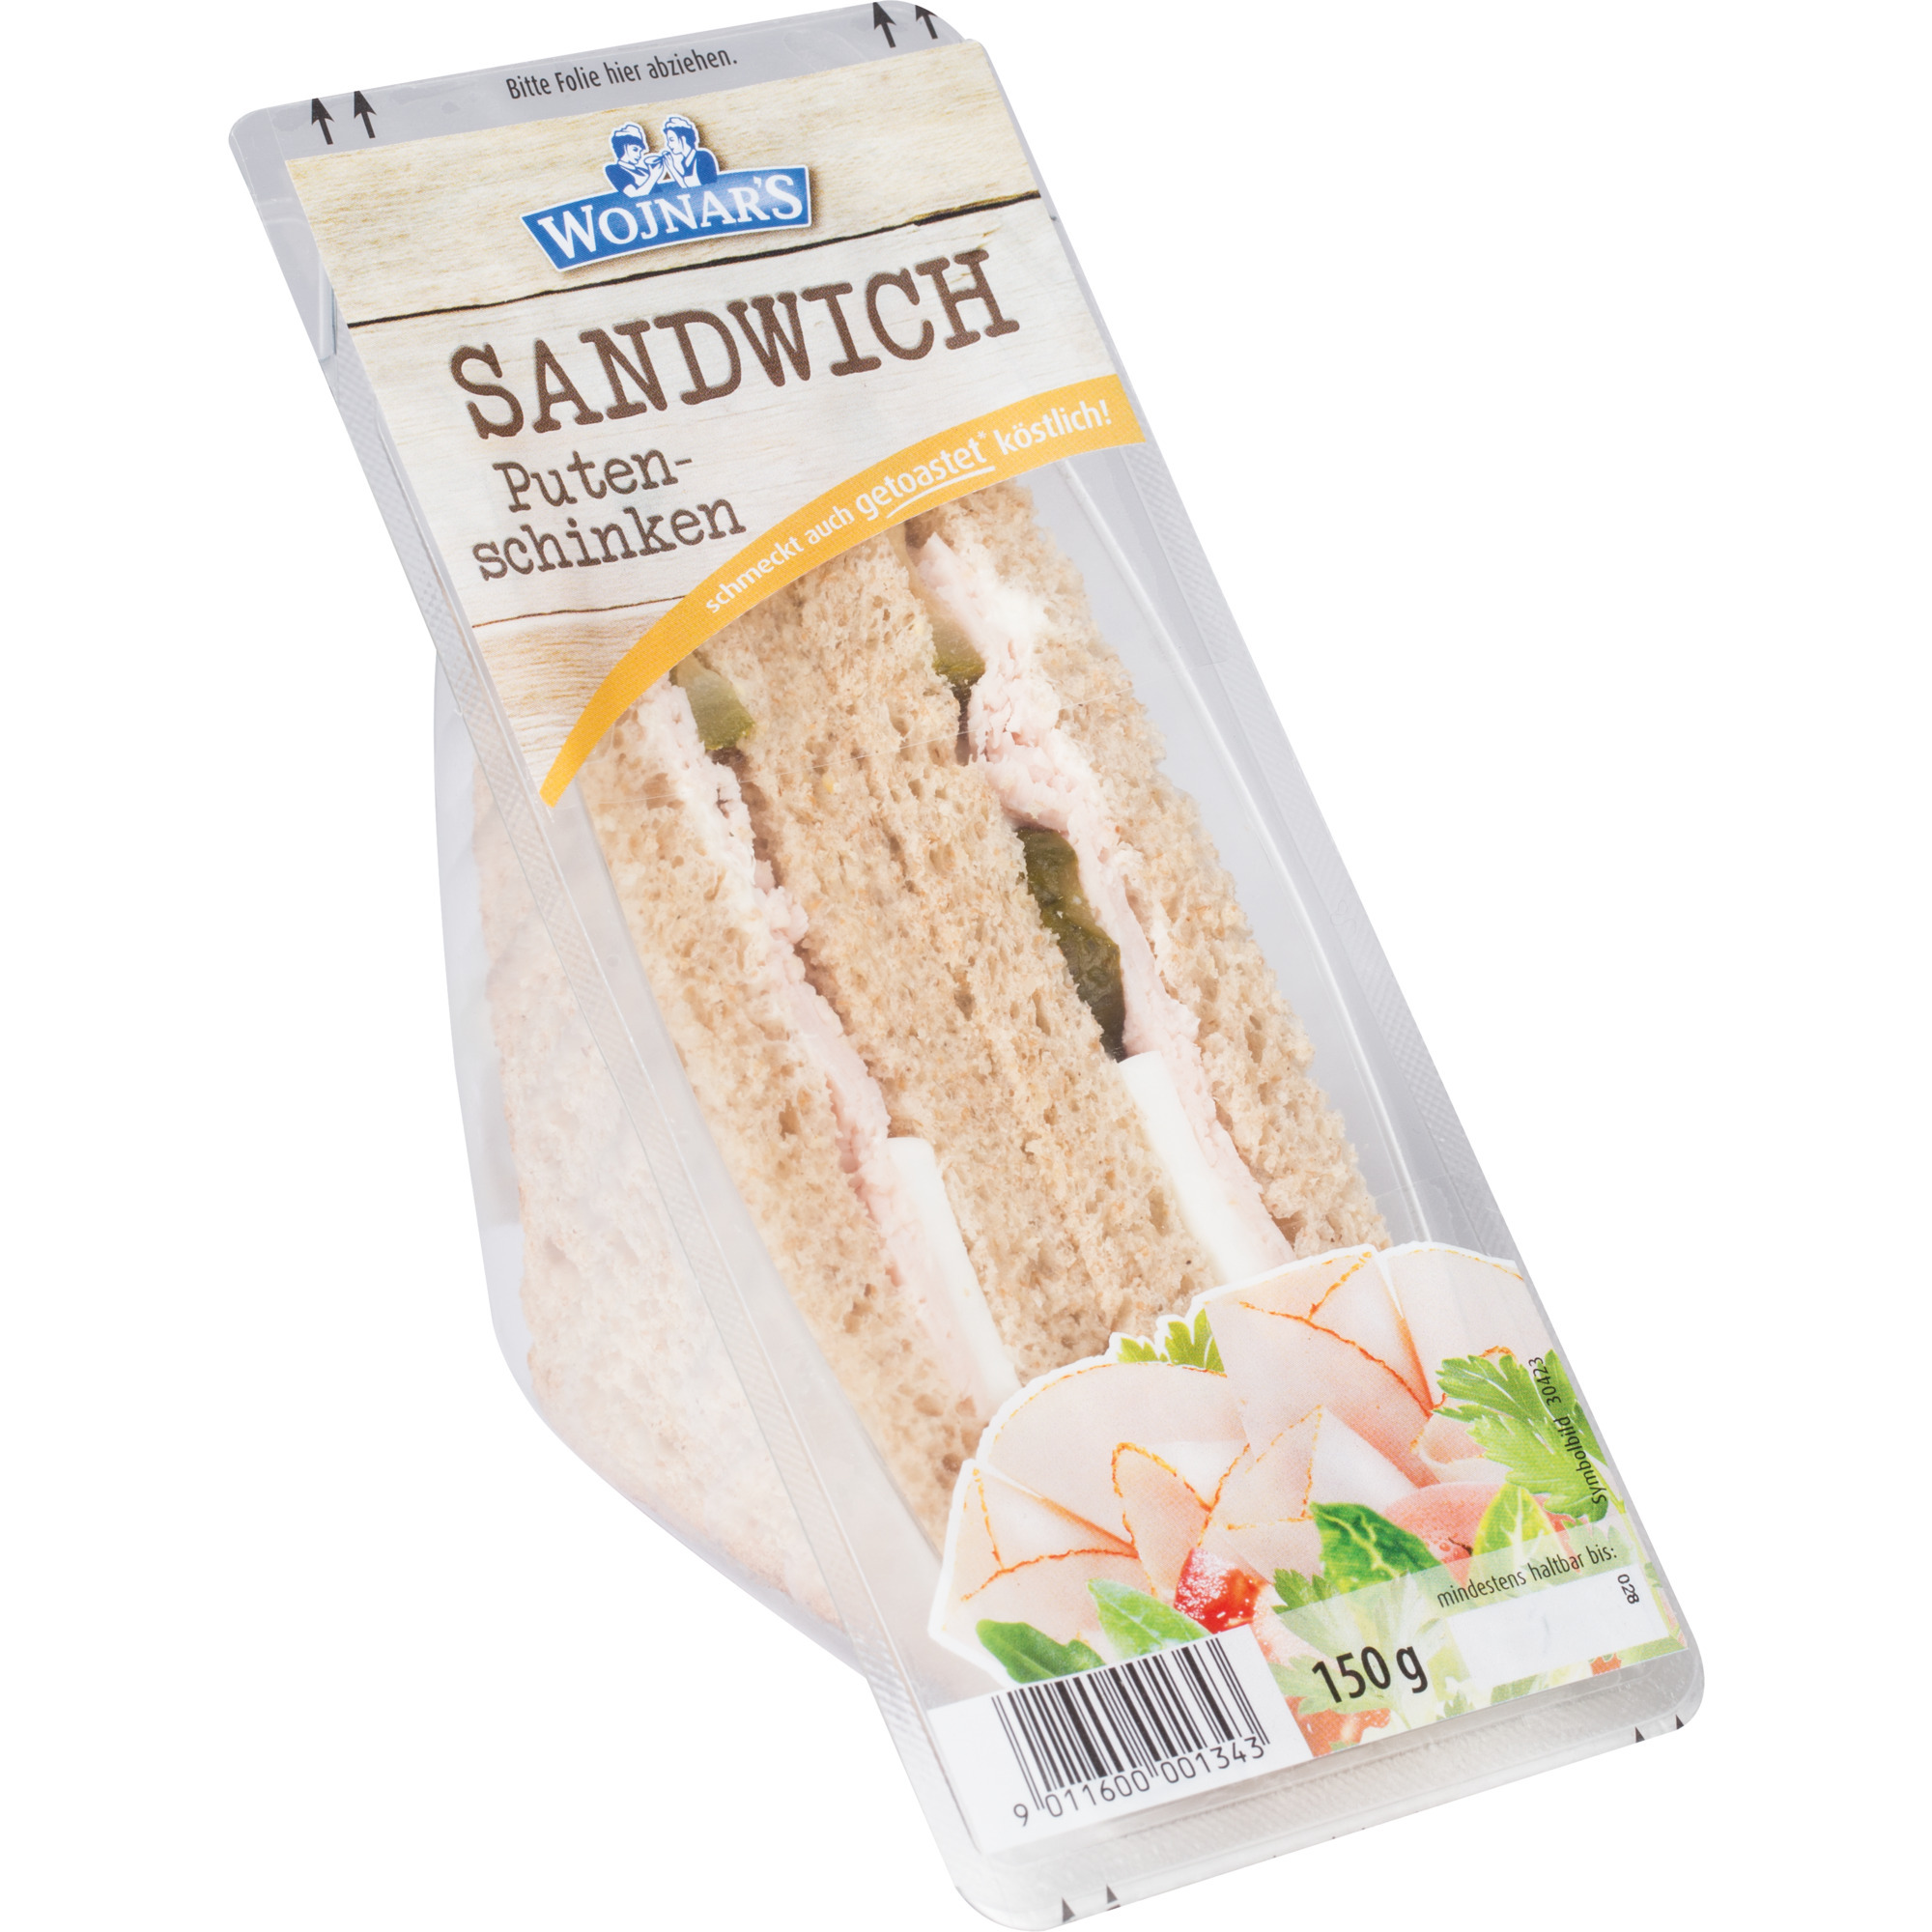 Wojnar's Sandwich 150g, Putenschinken